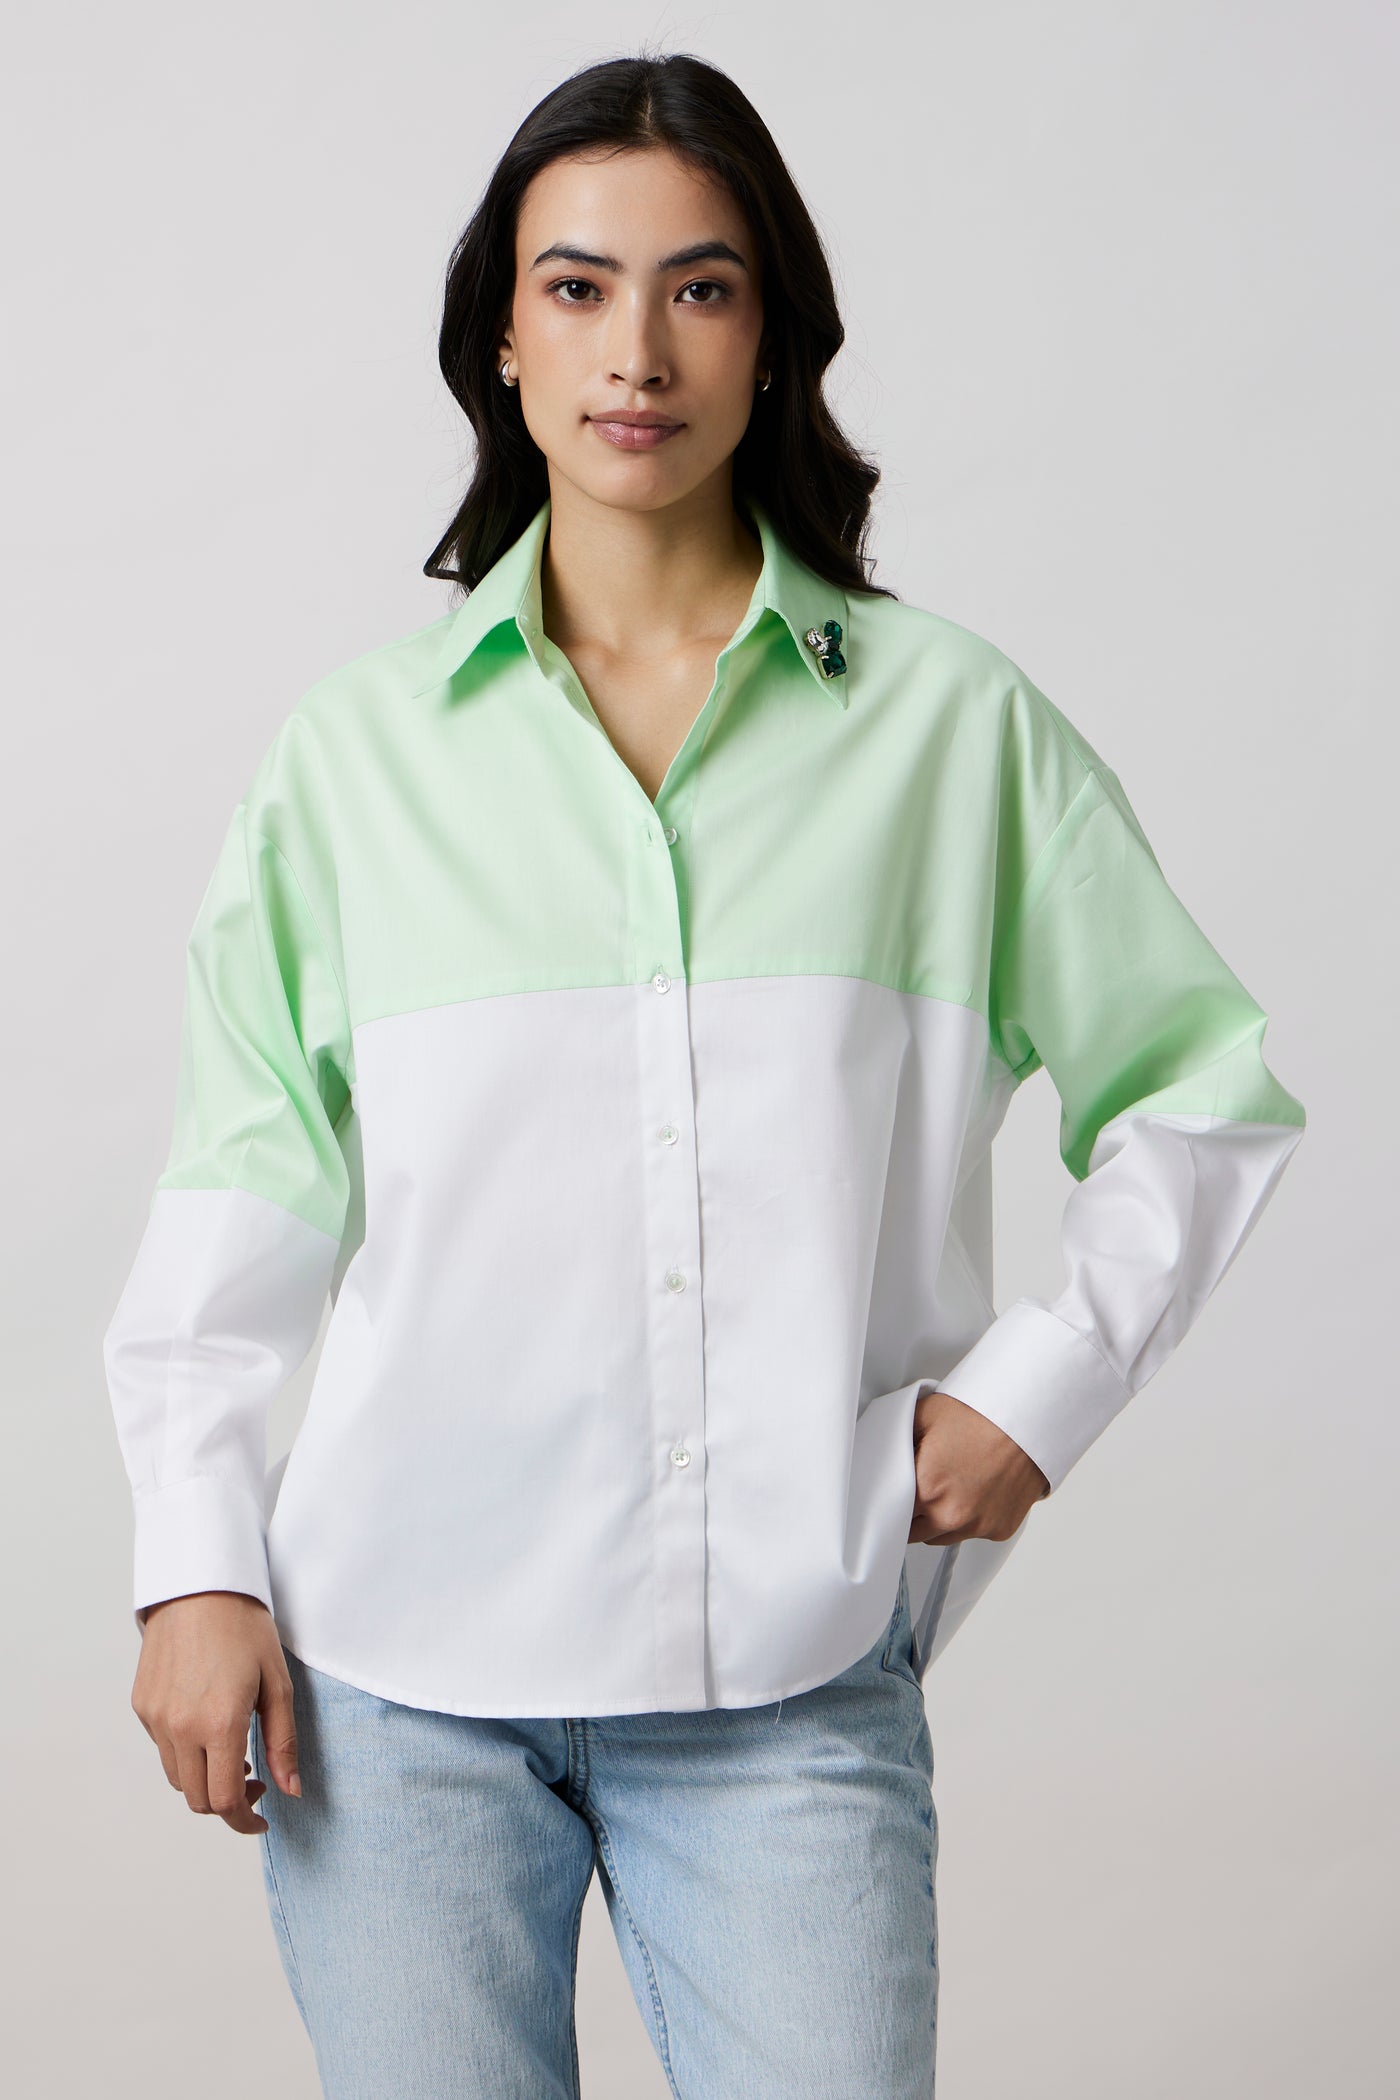 Lime Block Shirt with Swarovski Collar